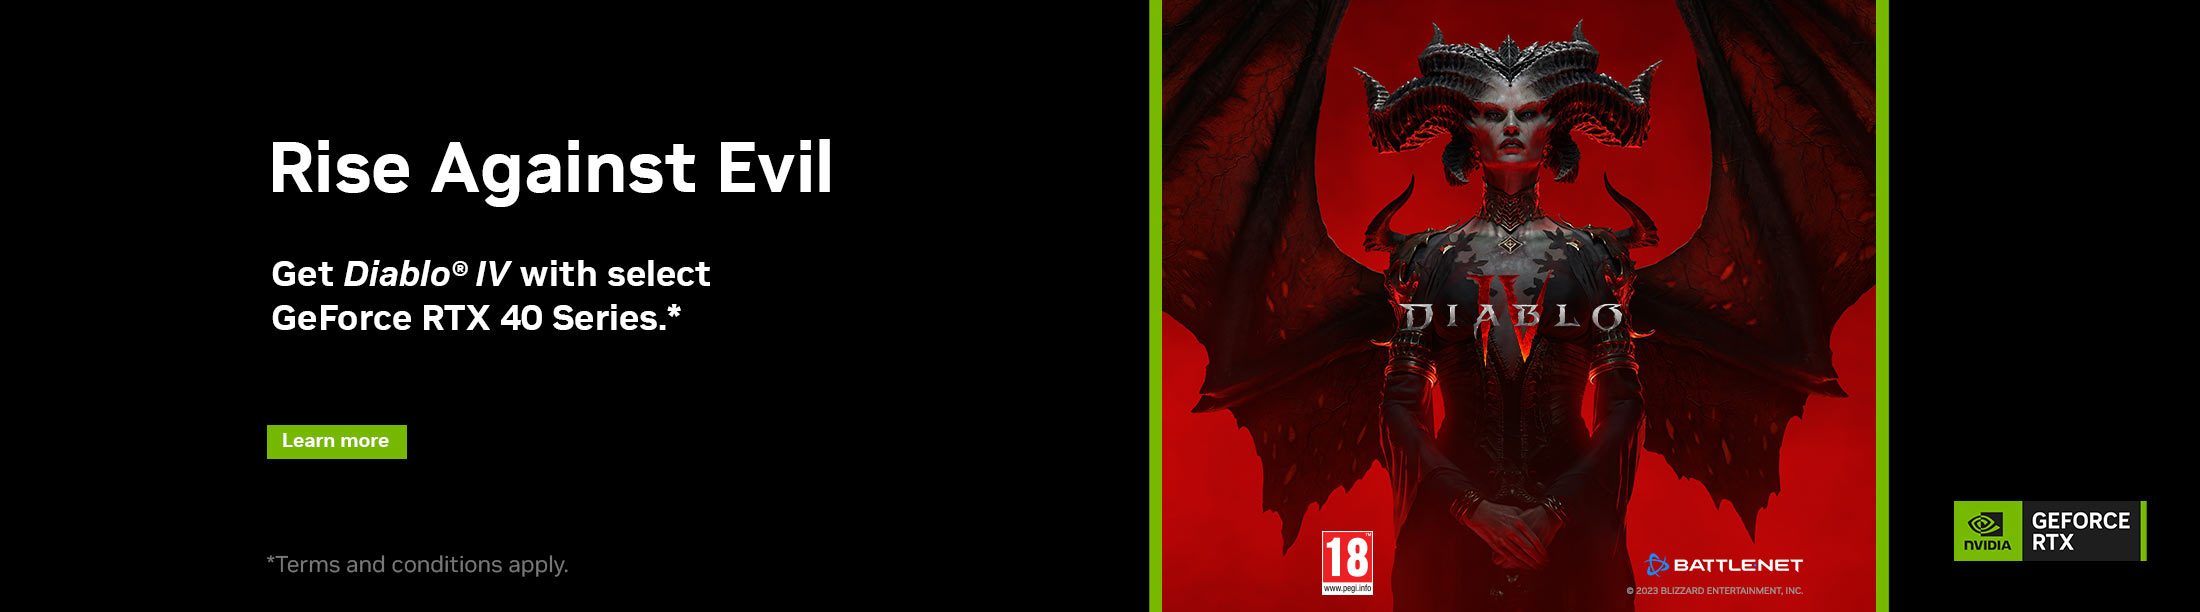 Get Diablo IV with select GeForce RTX 40 Series PCs